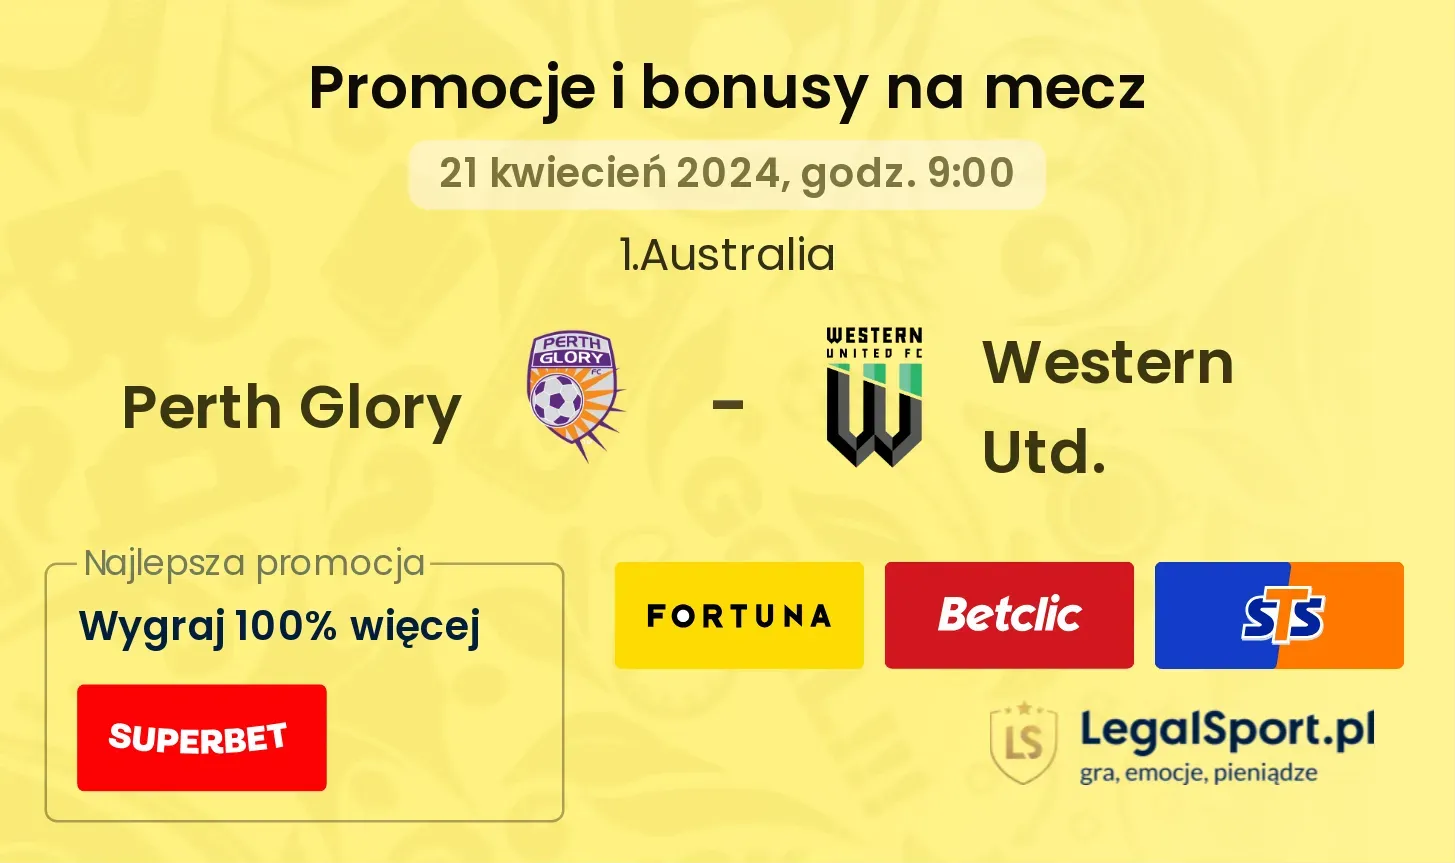 Perth Glory - Western Utd. promocje bonusy na mecz